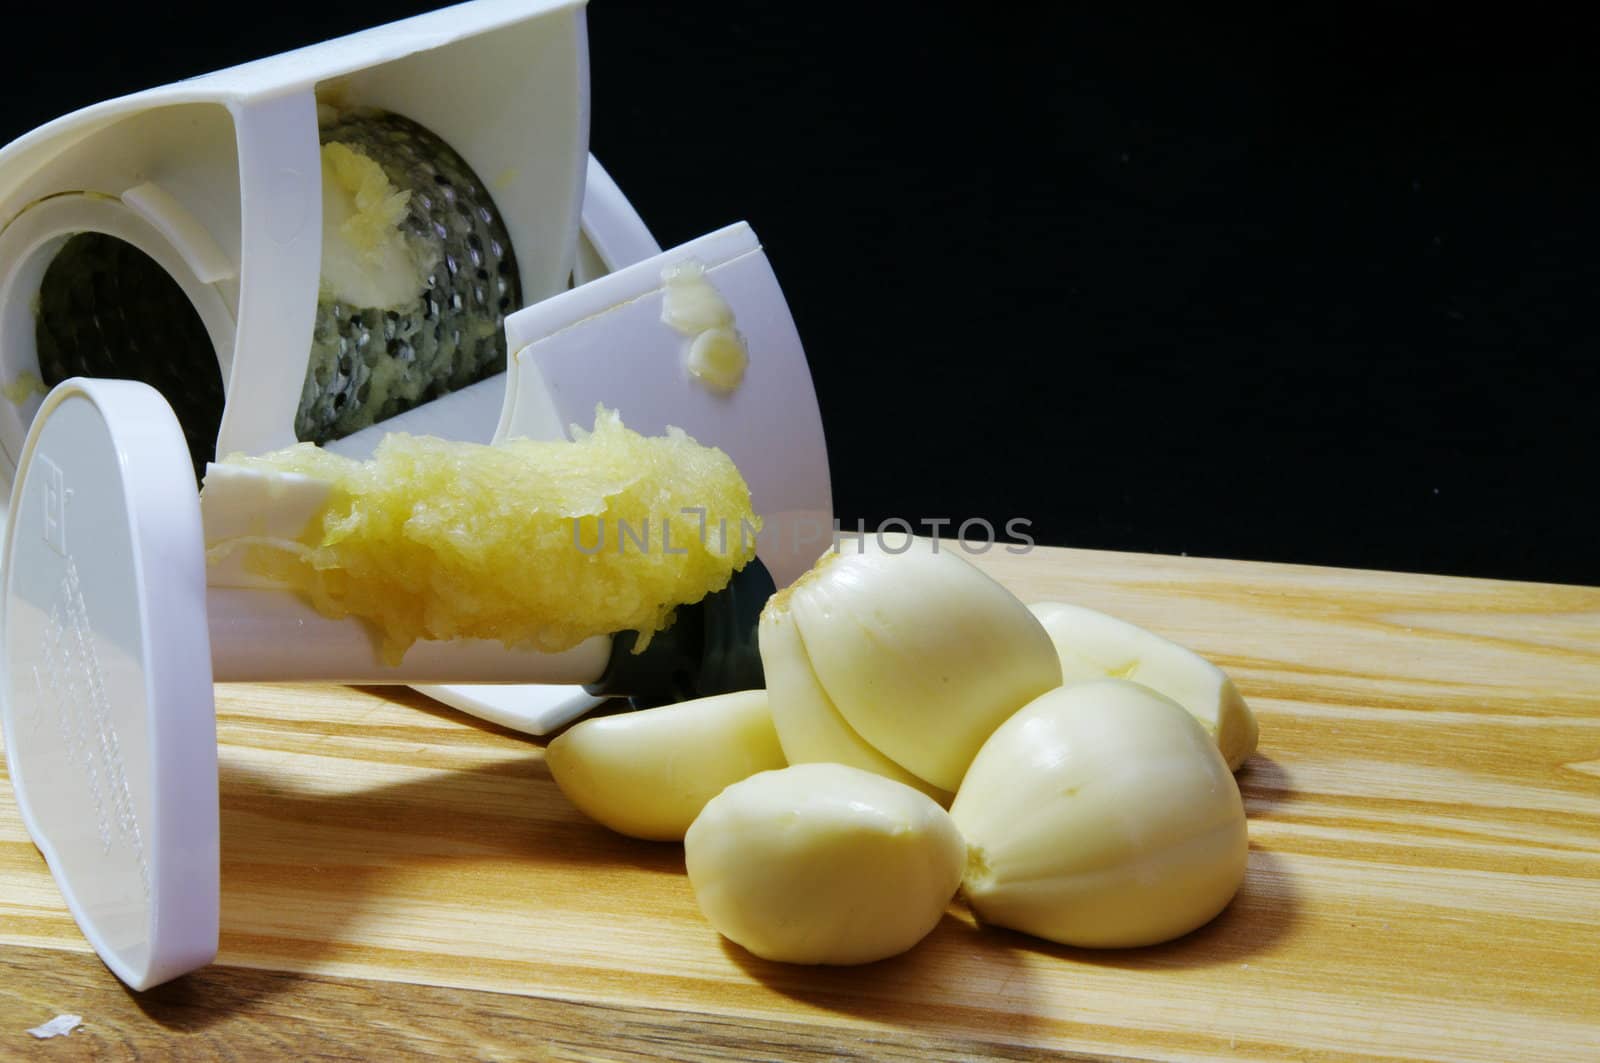 Pureed garlic by edcorey